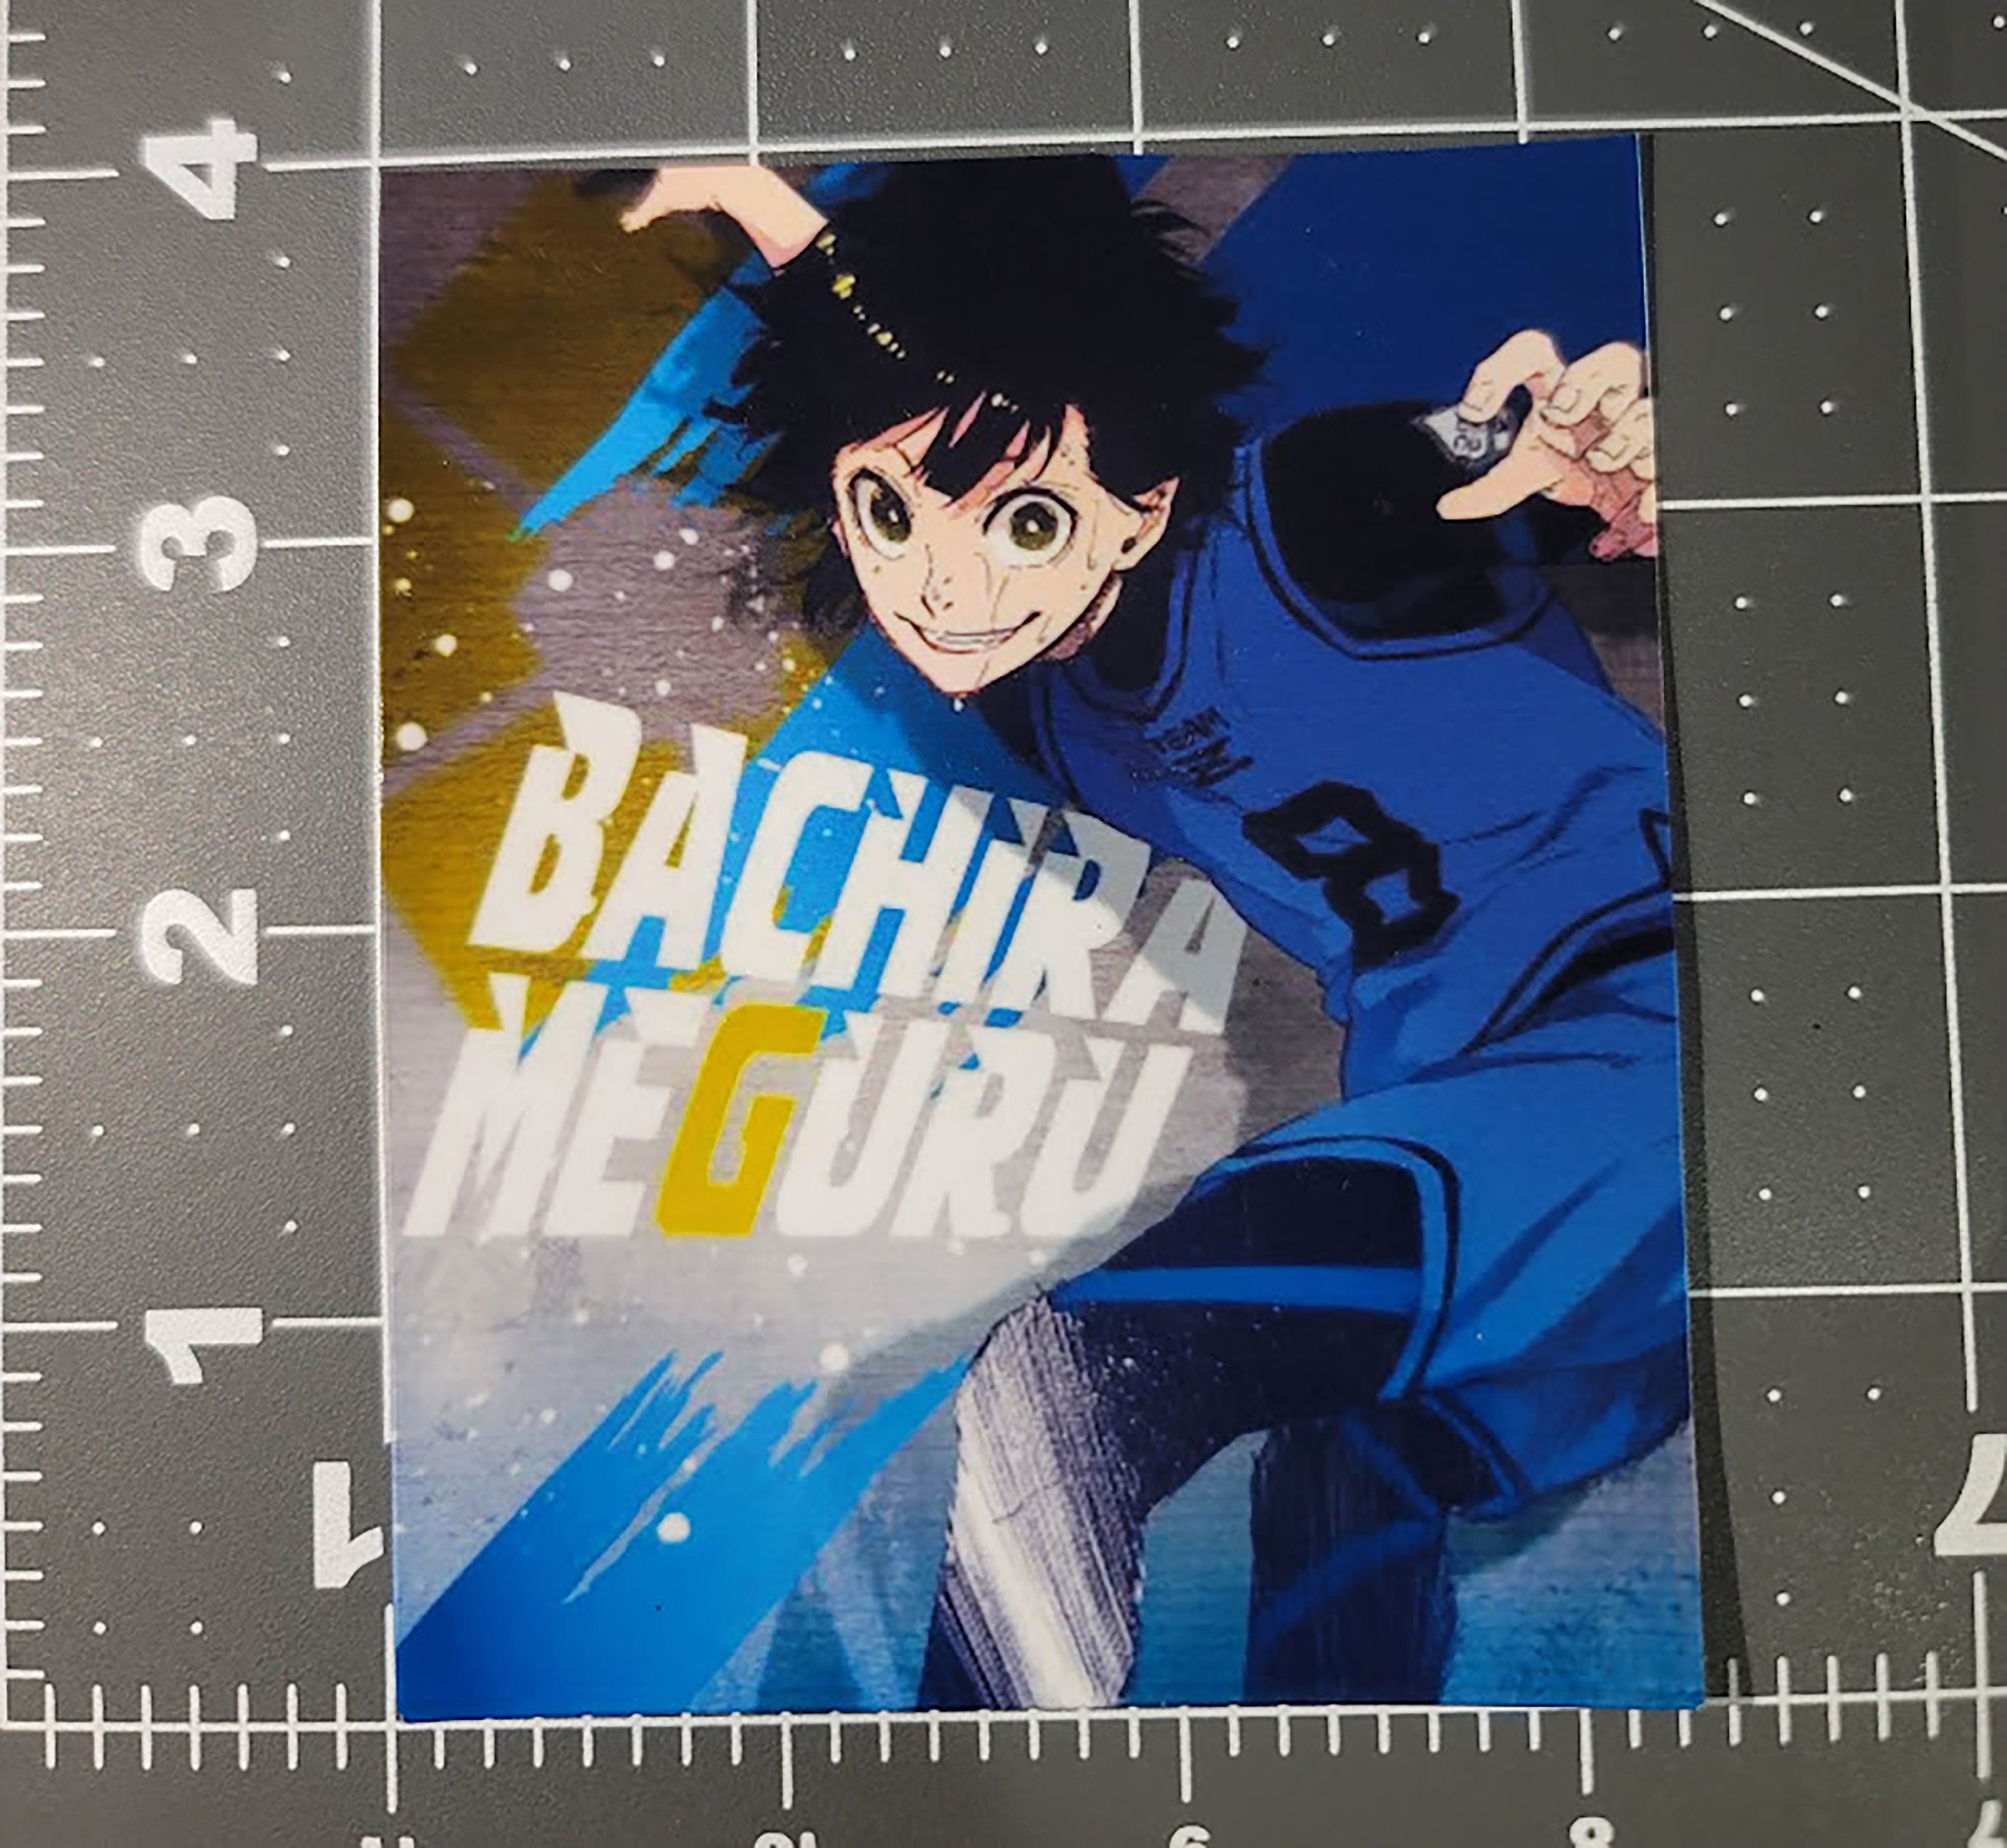 Bluelock - Bachira Meguru Sticker for Sale by AnimeClothing4